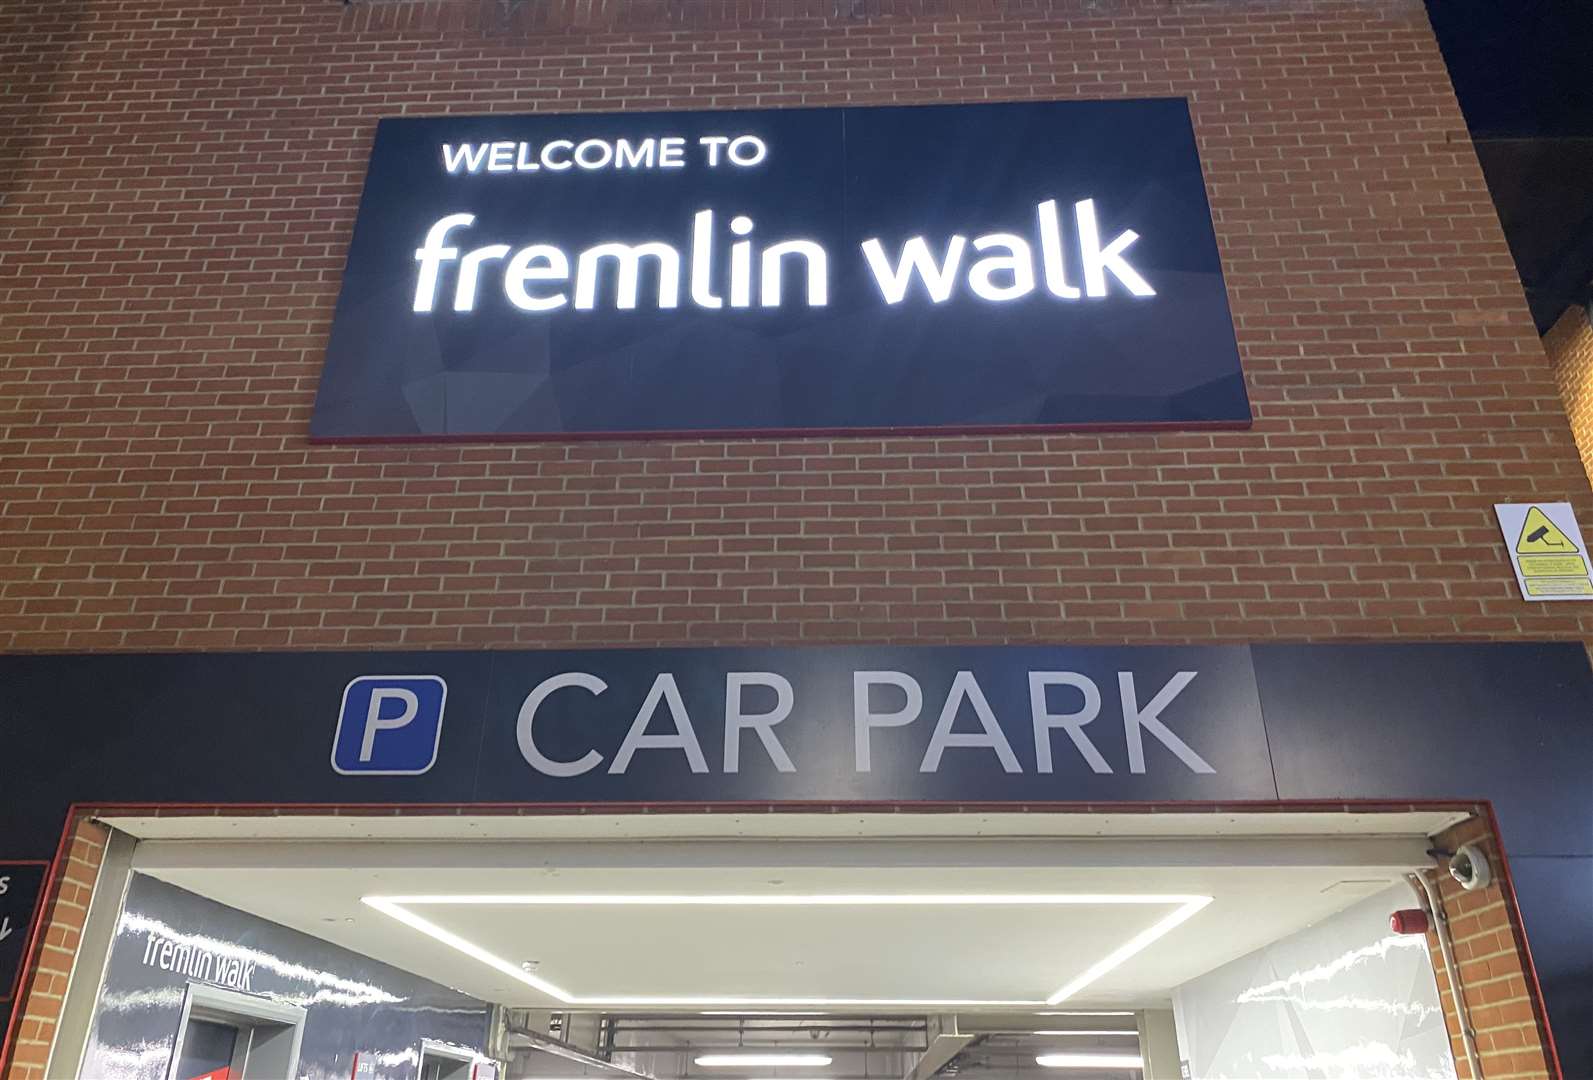 Fremlin Walk car park in Earl Street, Maidstone